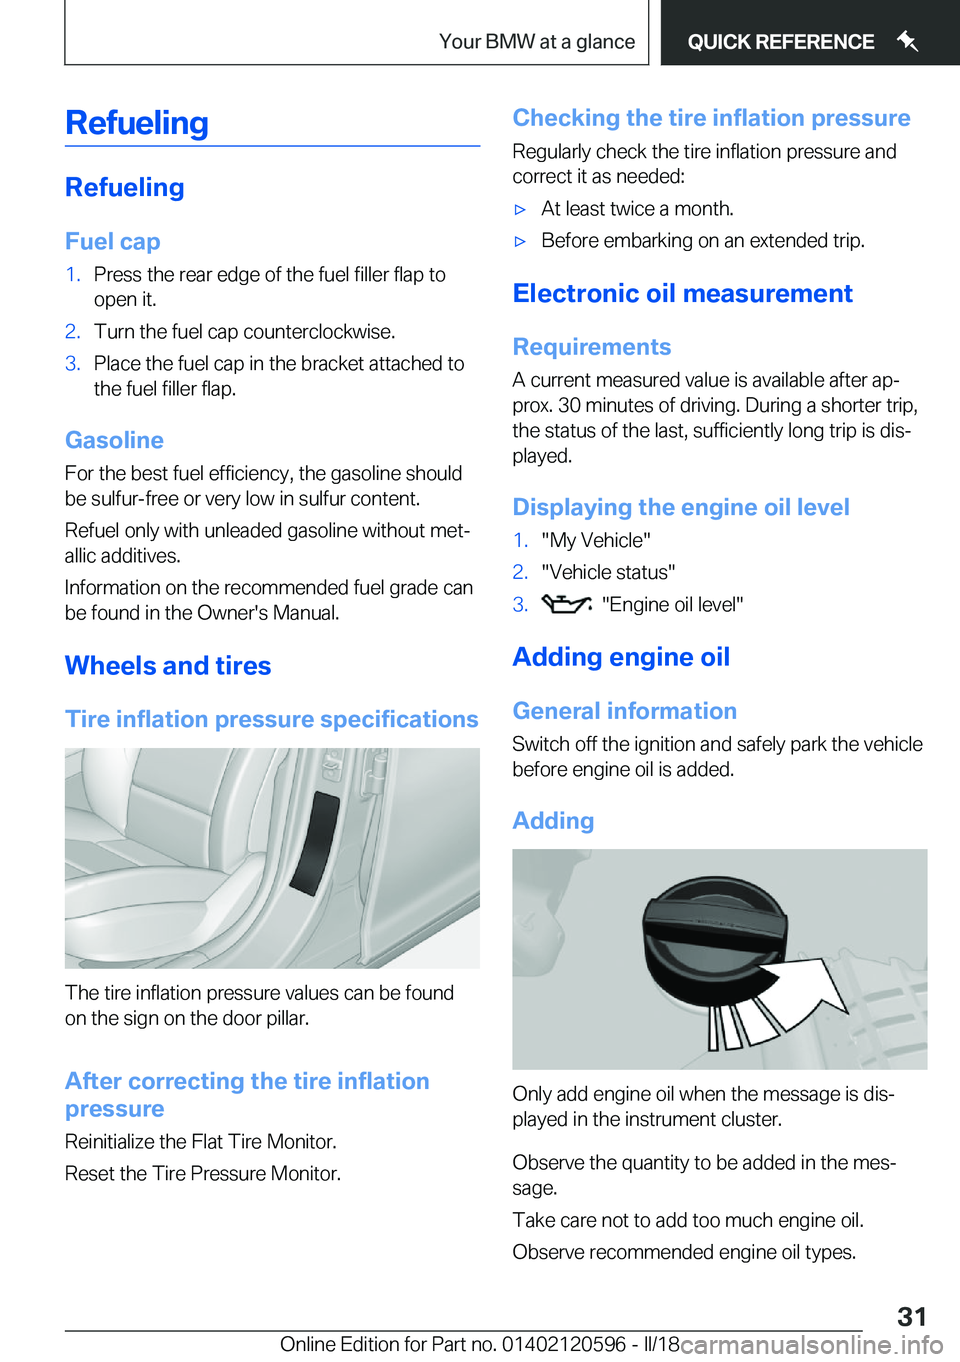 BMW X1 2018 Owners Guide �R�e�f�u�e�l�i�n�g
�R�e�f�u�e�l�i�n�g�F�u�e�l��c�a�p
�1�.�P�r�e�s�s� �t�h�e� �r�e�a�r� �e�d�g�e� �o�f� �t�h�e� �f�u�e�l� �f�i�l�l�e�r� �f�l�a�p� �t�o�o�p�e�n� �i�t�.�2�.�T�u�r�n� �t�h�e� �f�u�e�l� �c